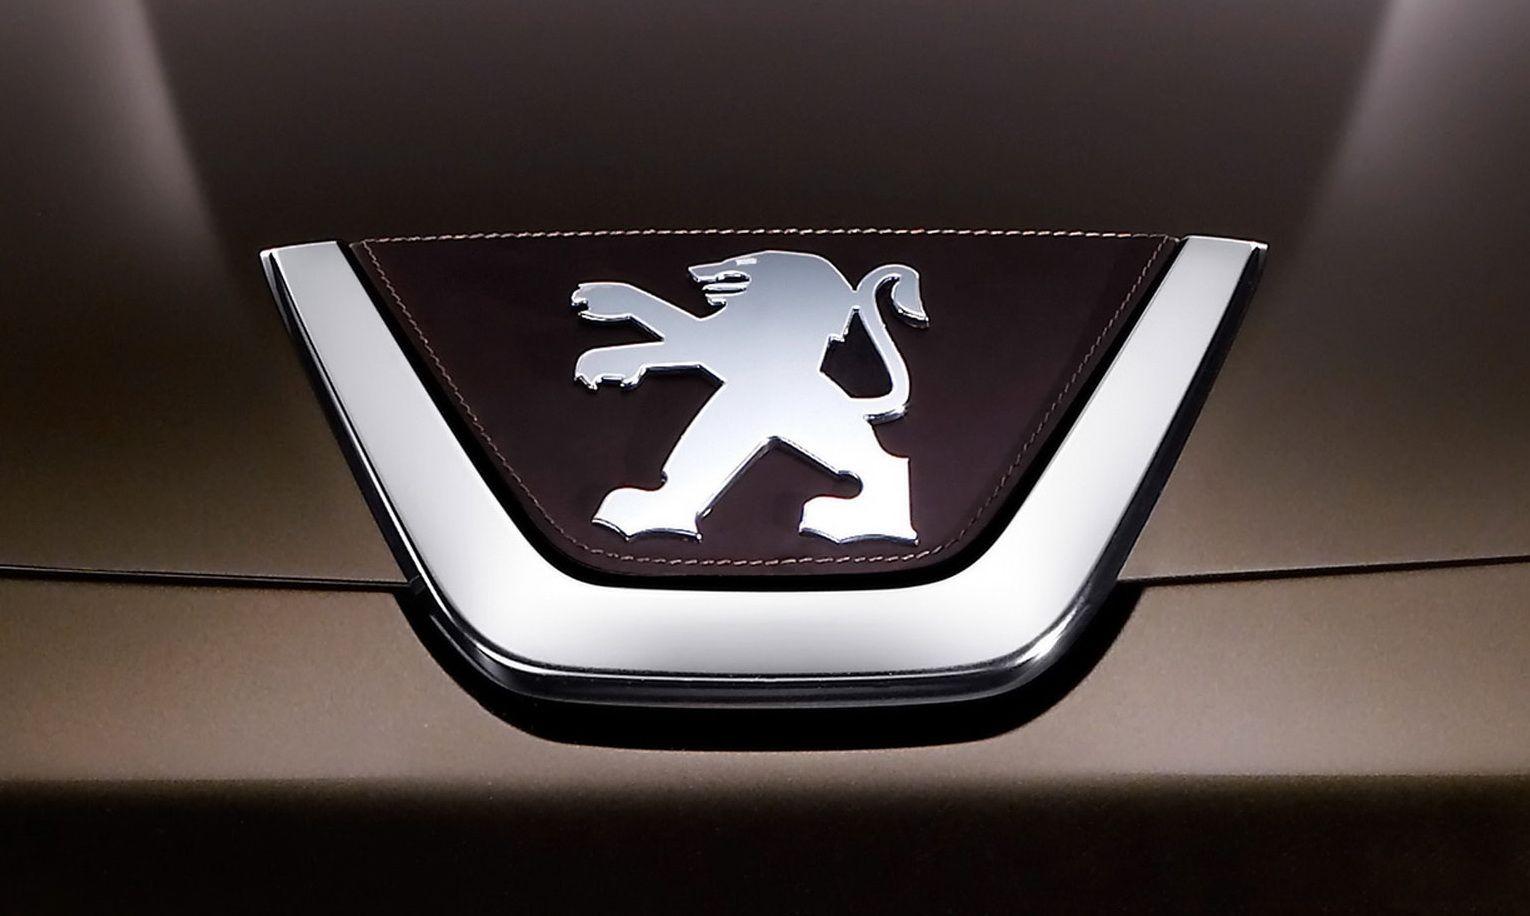 The European Lion Car Logo - Peugeot Logo, Peugeot Car Symbol Meaning and History | Car Brand ...